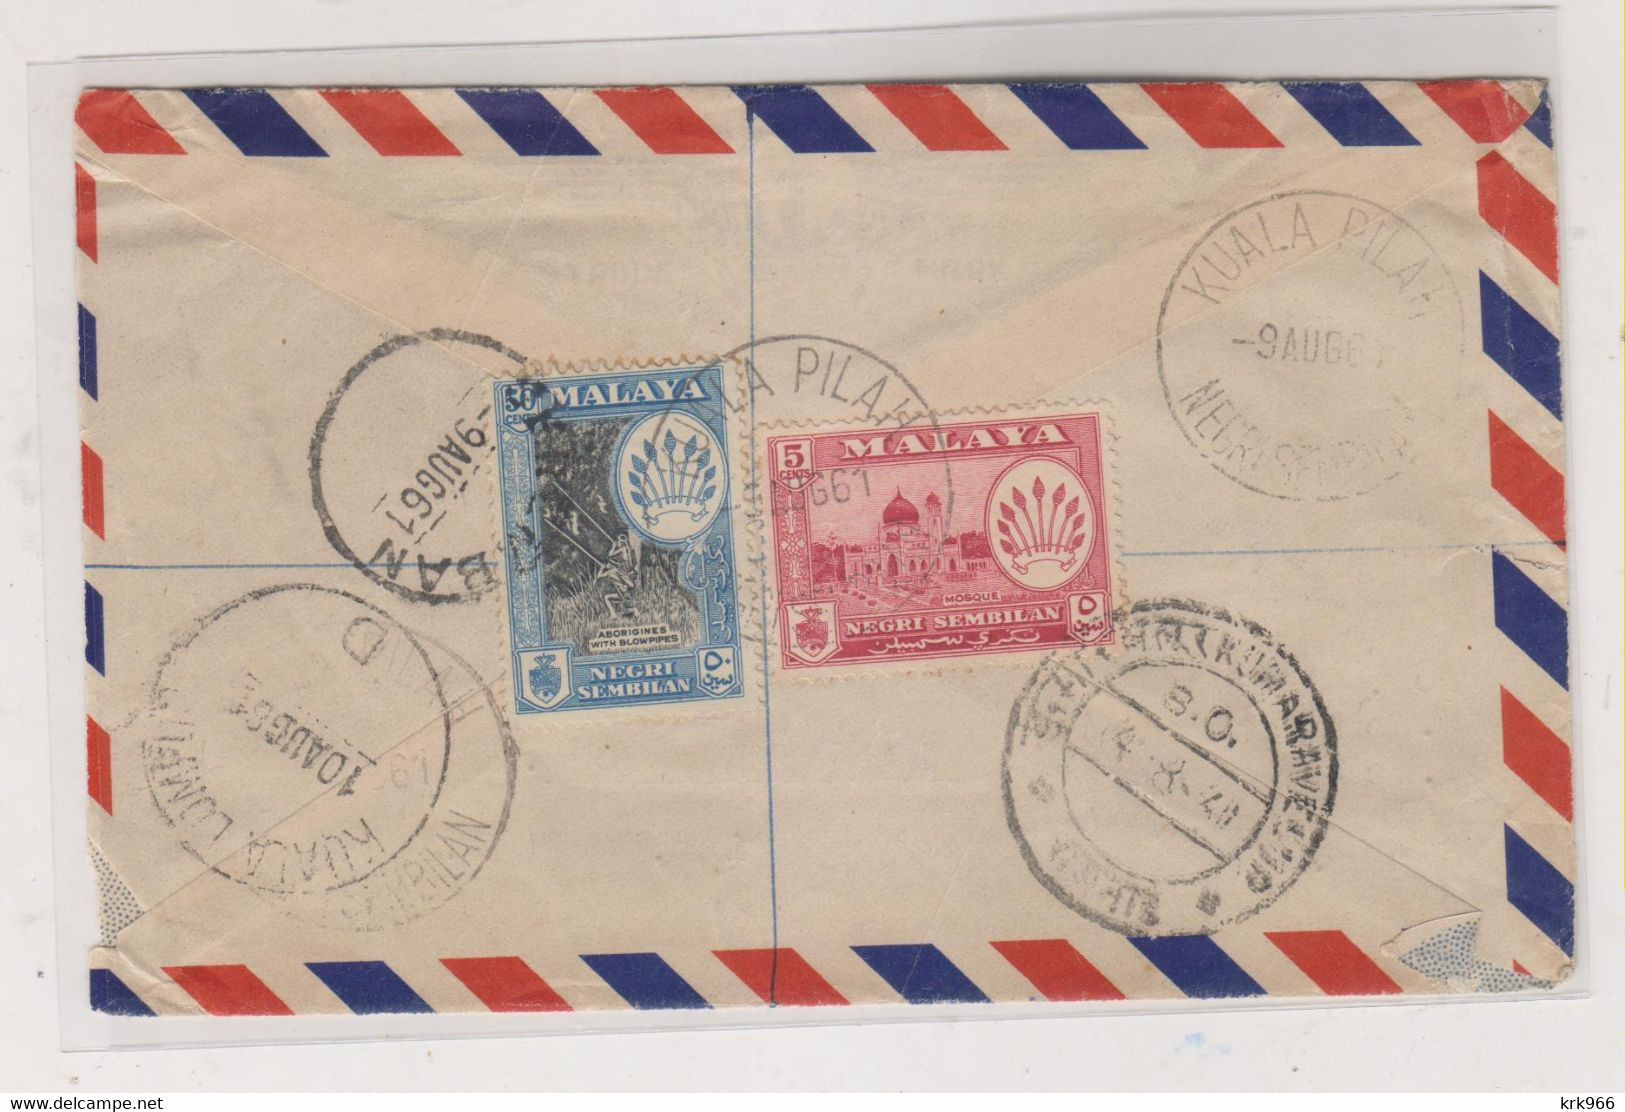 MALAYA NEGRI SEMILAN 1960 KUALA PILACH Registered Airmail Cover - Negri Sembilan